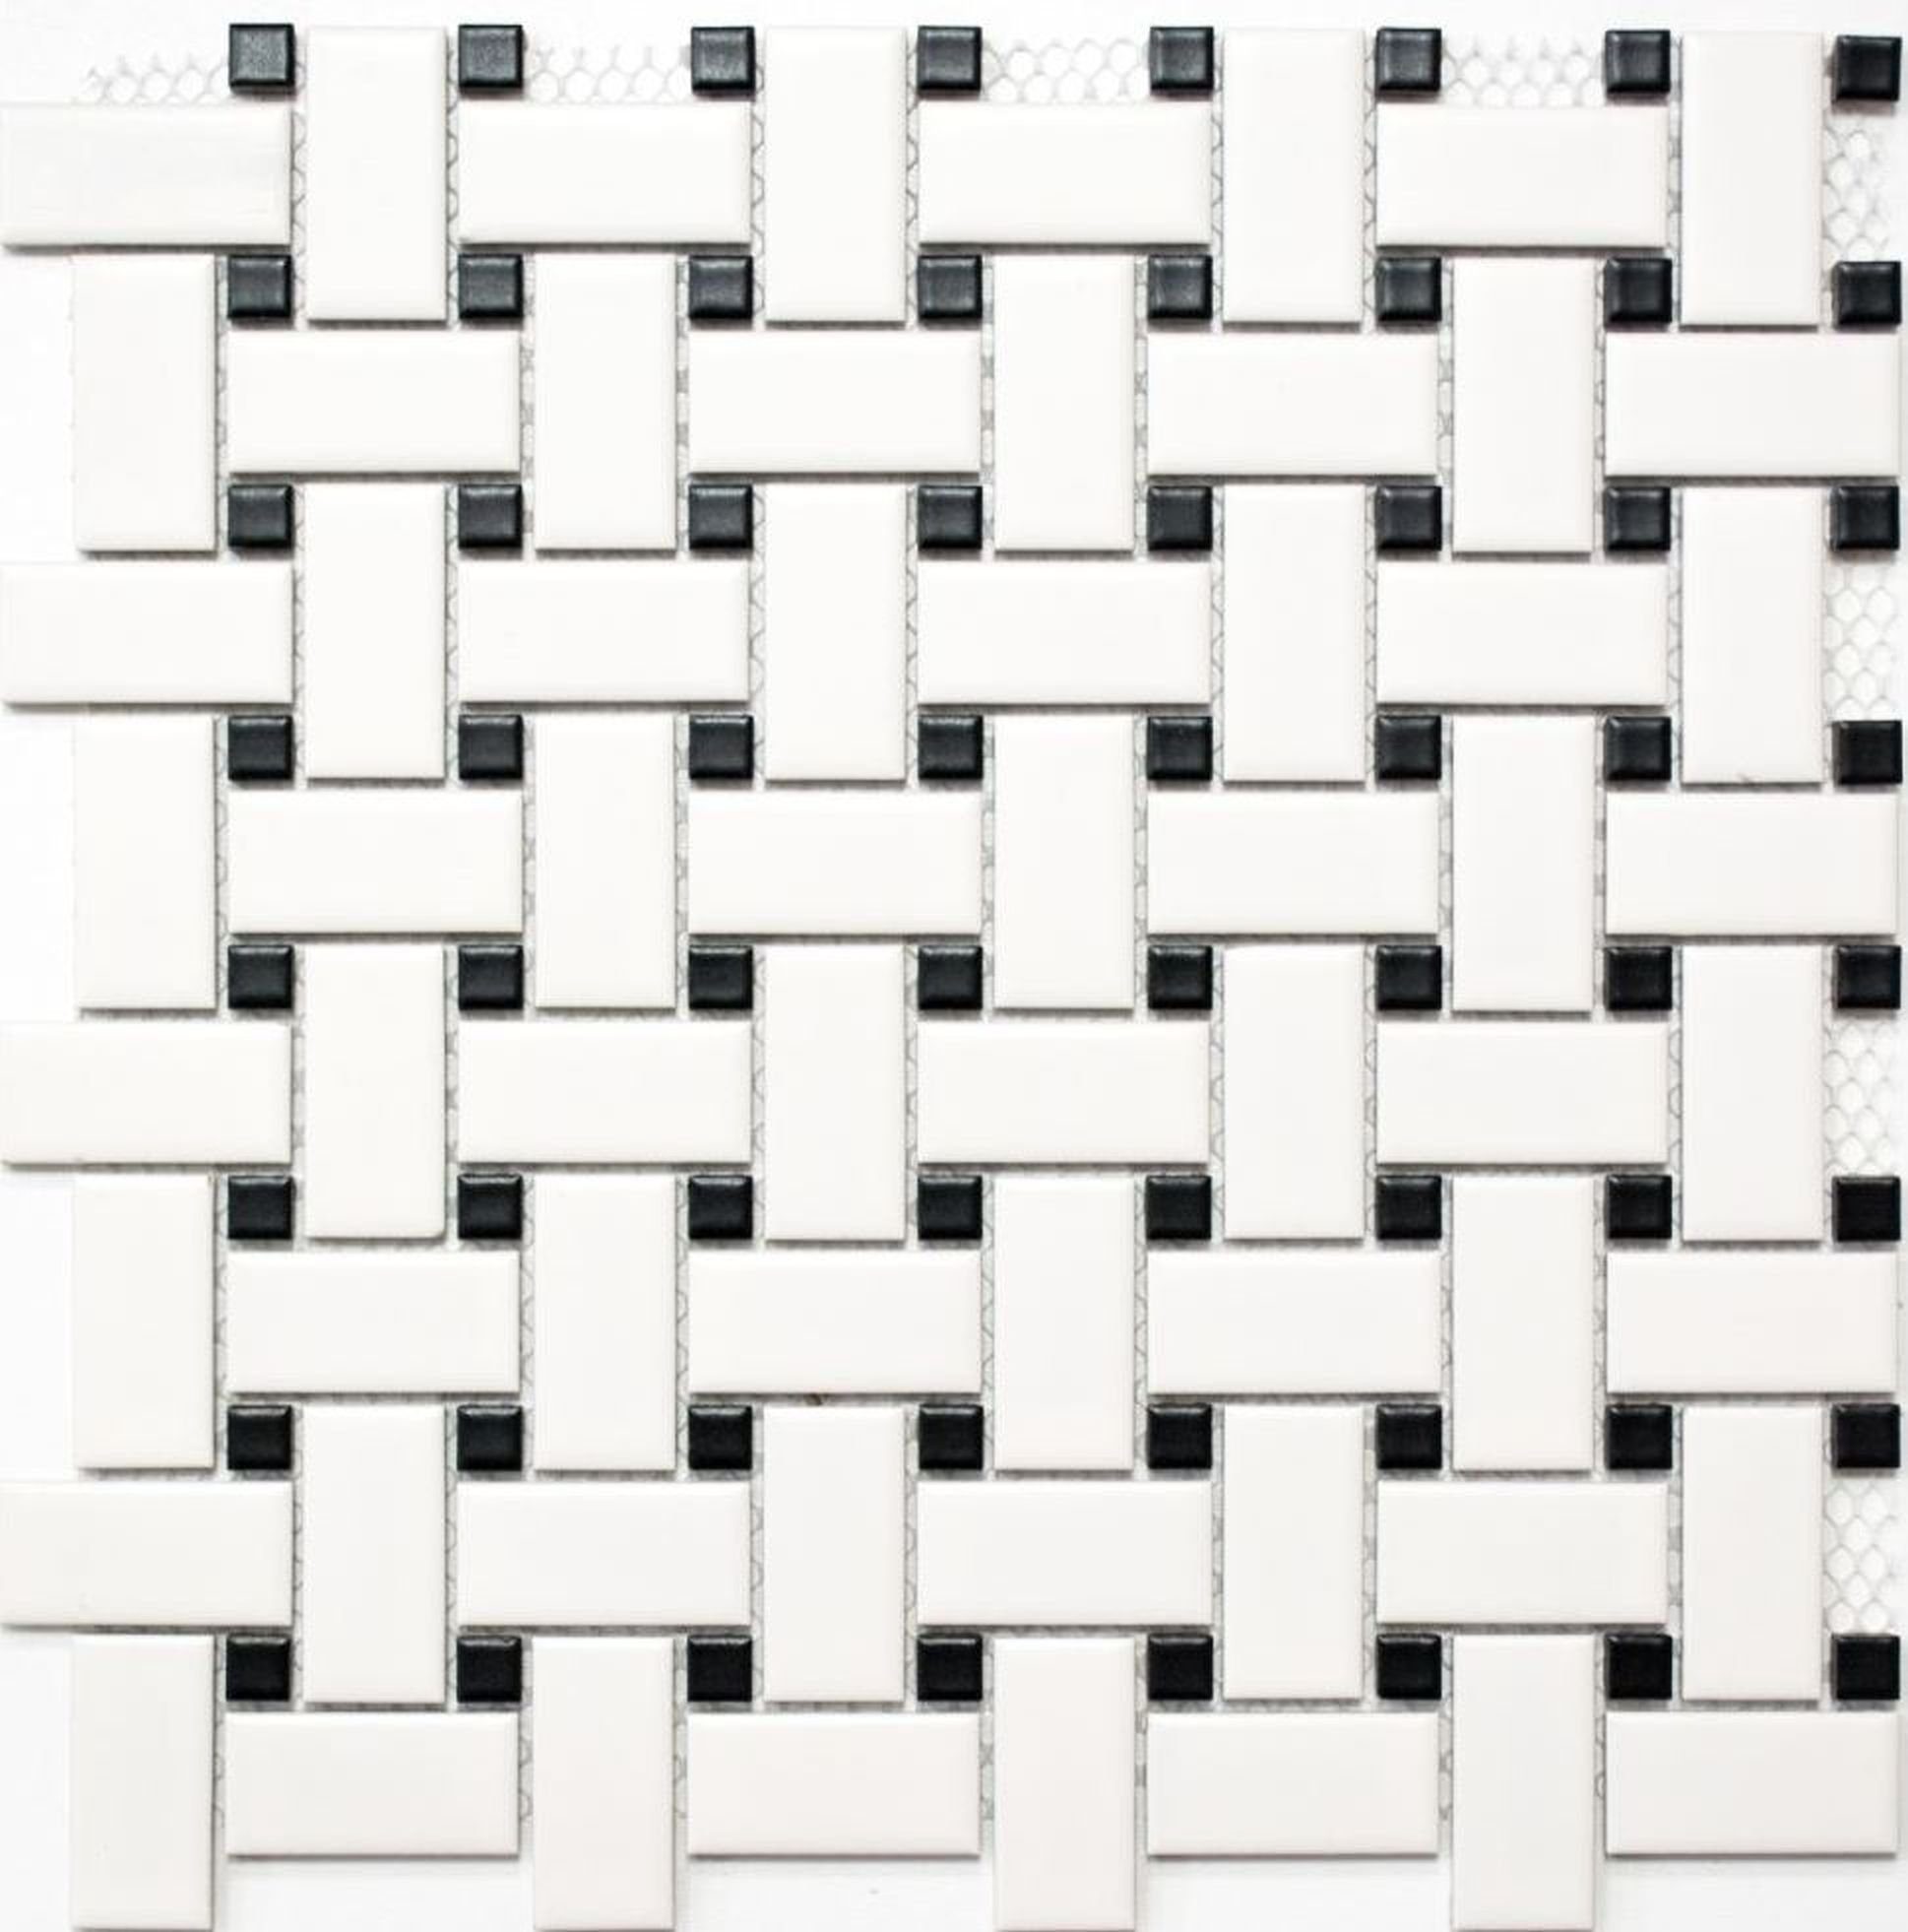 Mosani Mosaikfliesen Basket Mosaik Fliese Keramik weiß matt schwarz Bad Wand WC